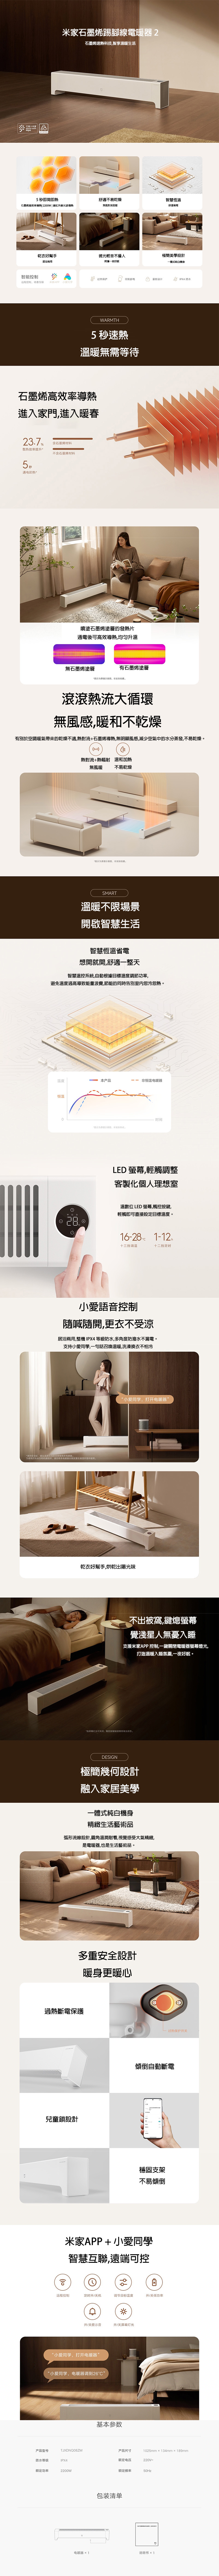 Xiaomi Mijia Graphene Baseboard Heater 2